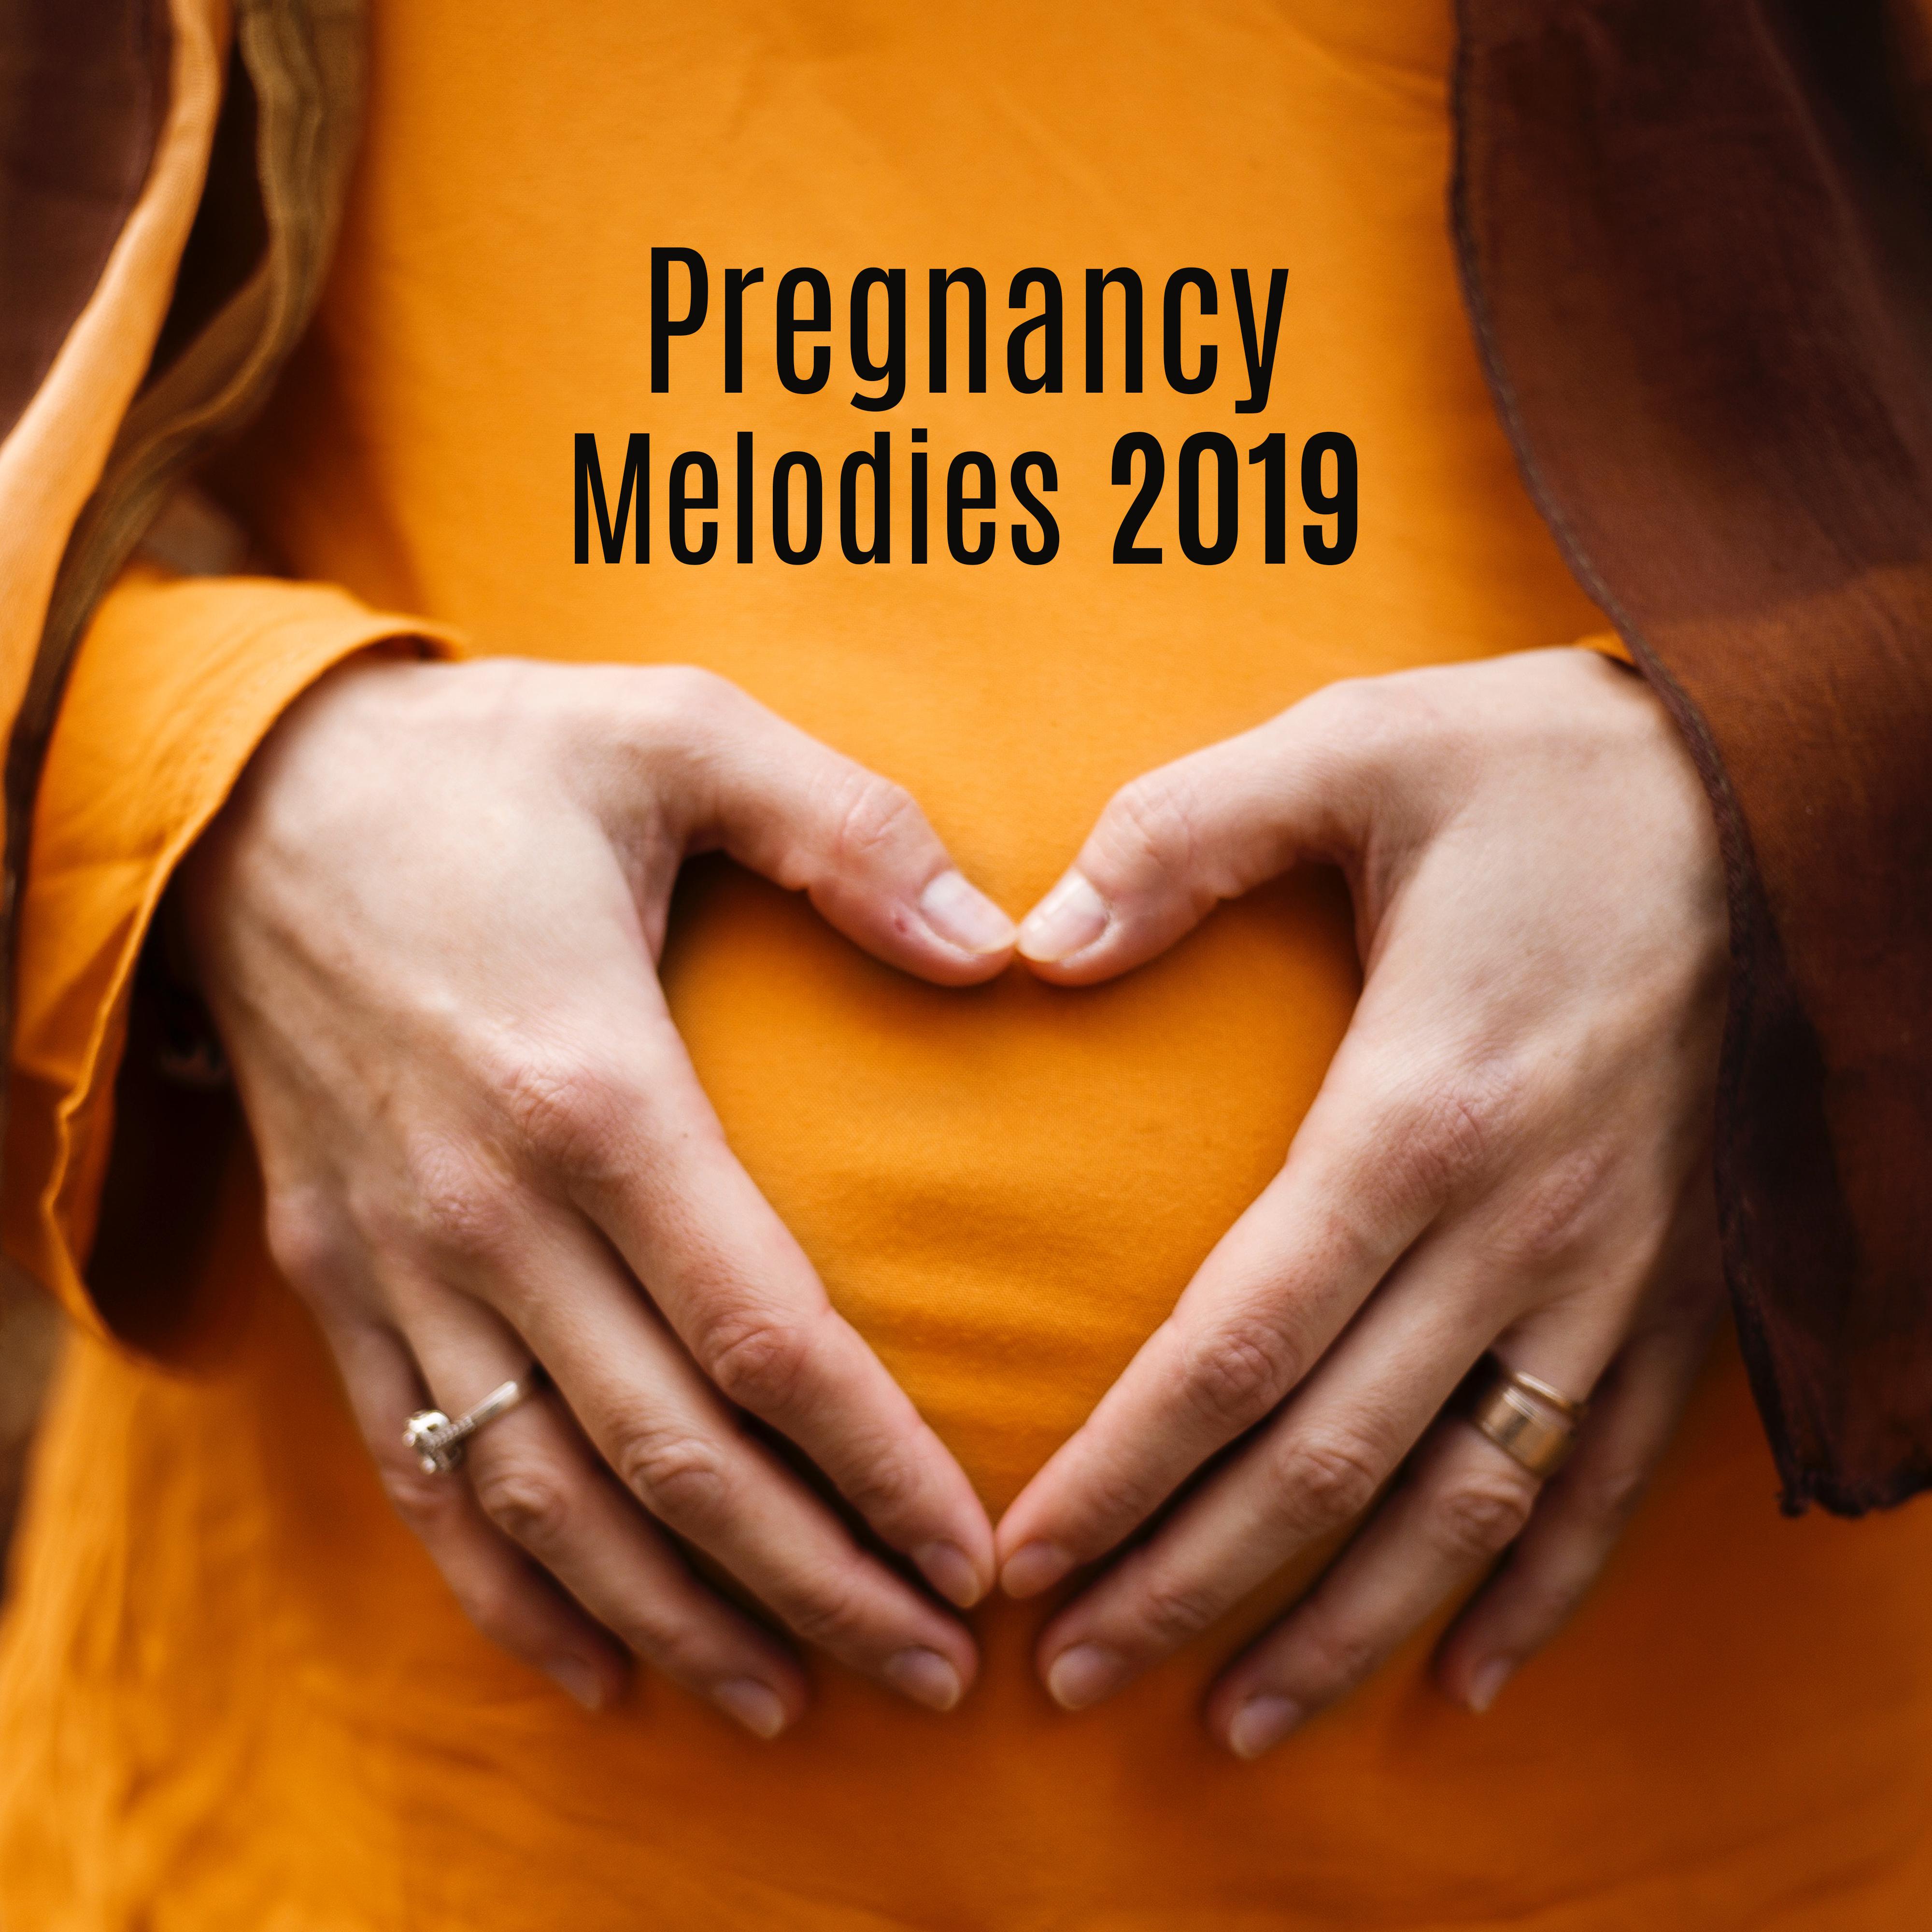 Pregnancy Melodies 2019: New Age Music to Calm Down, Zen, Music Zone, Pregnancy Music 2019